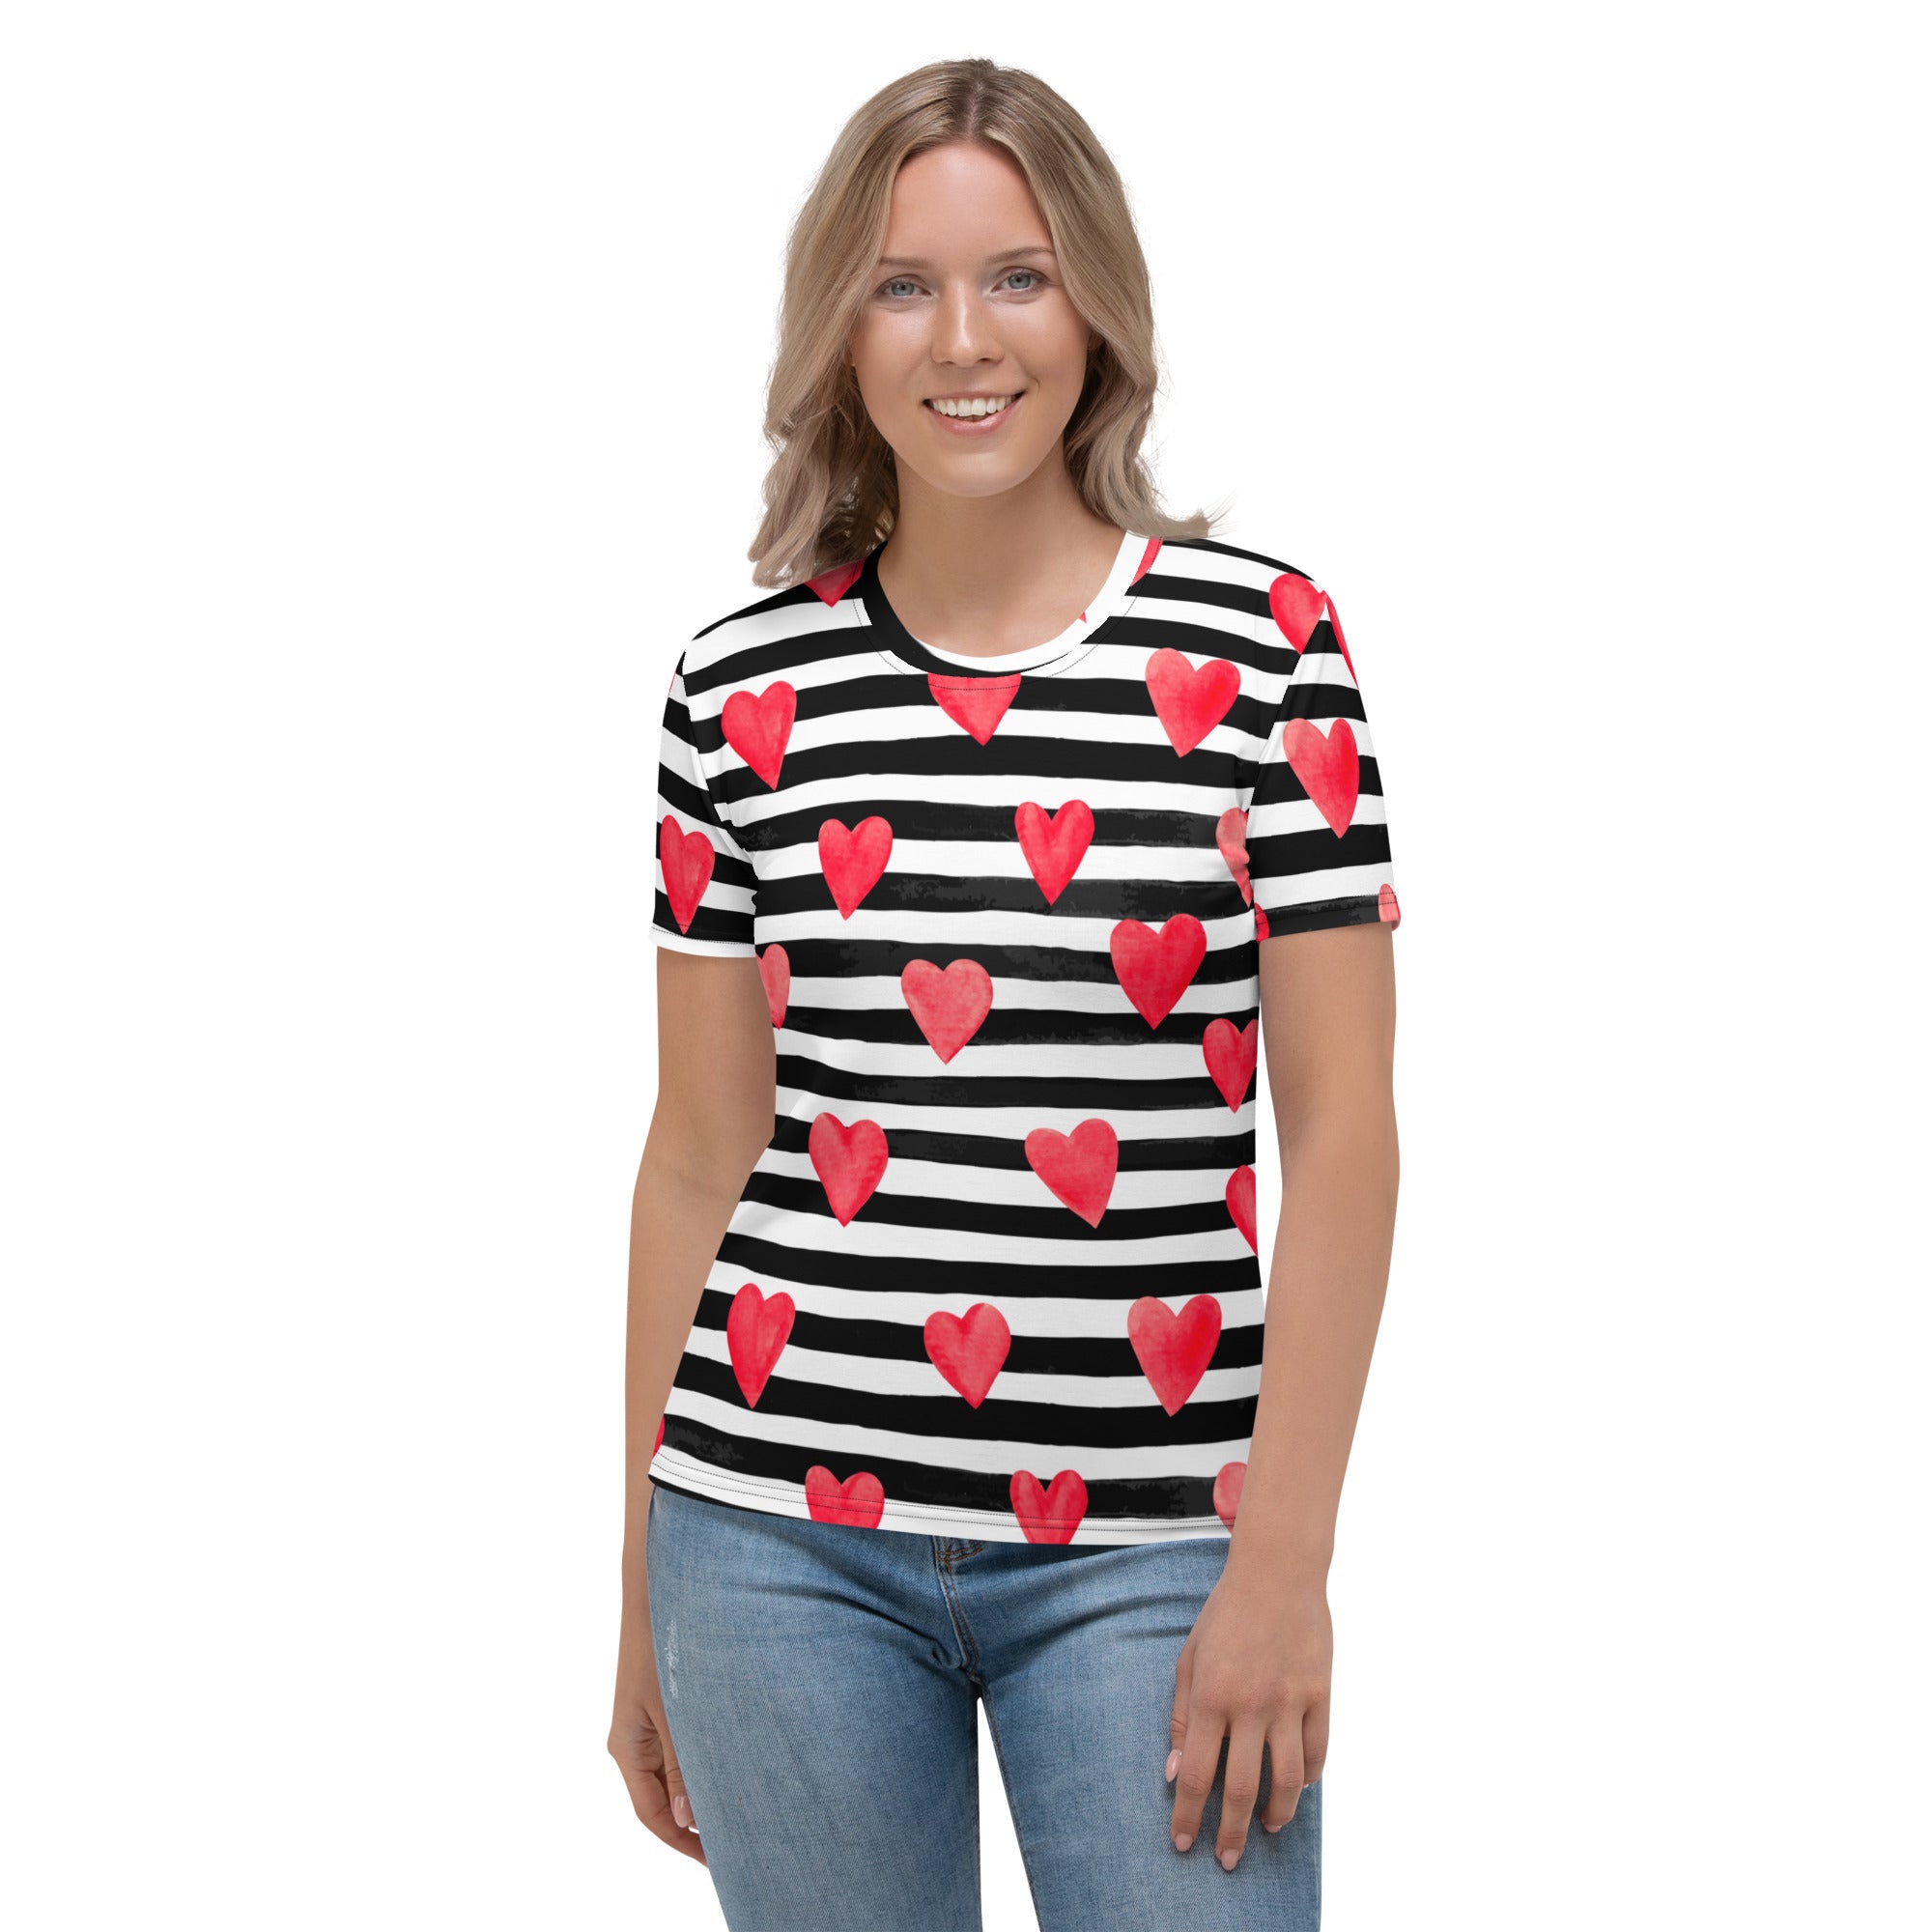 Stripes & Hearts T-shirt